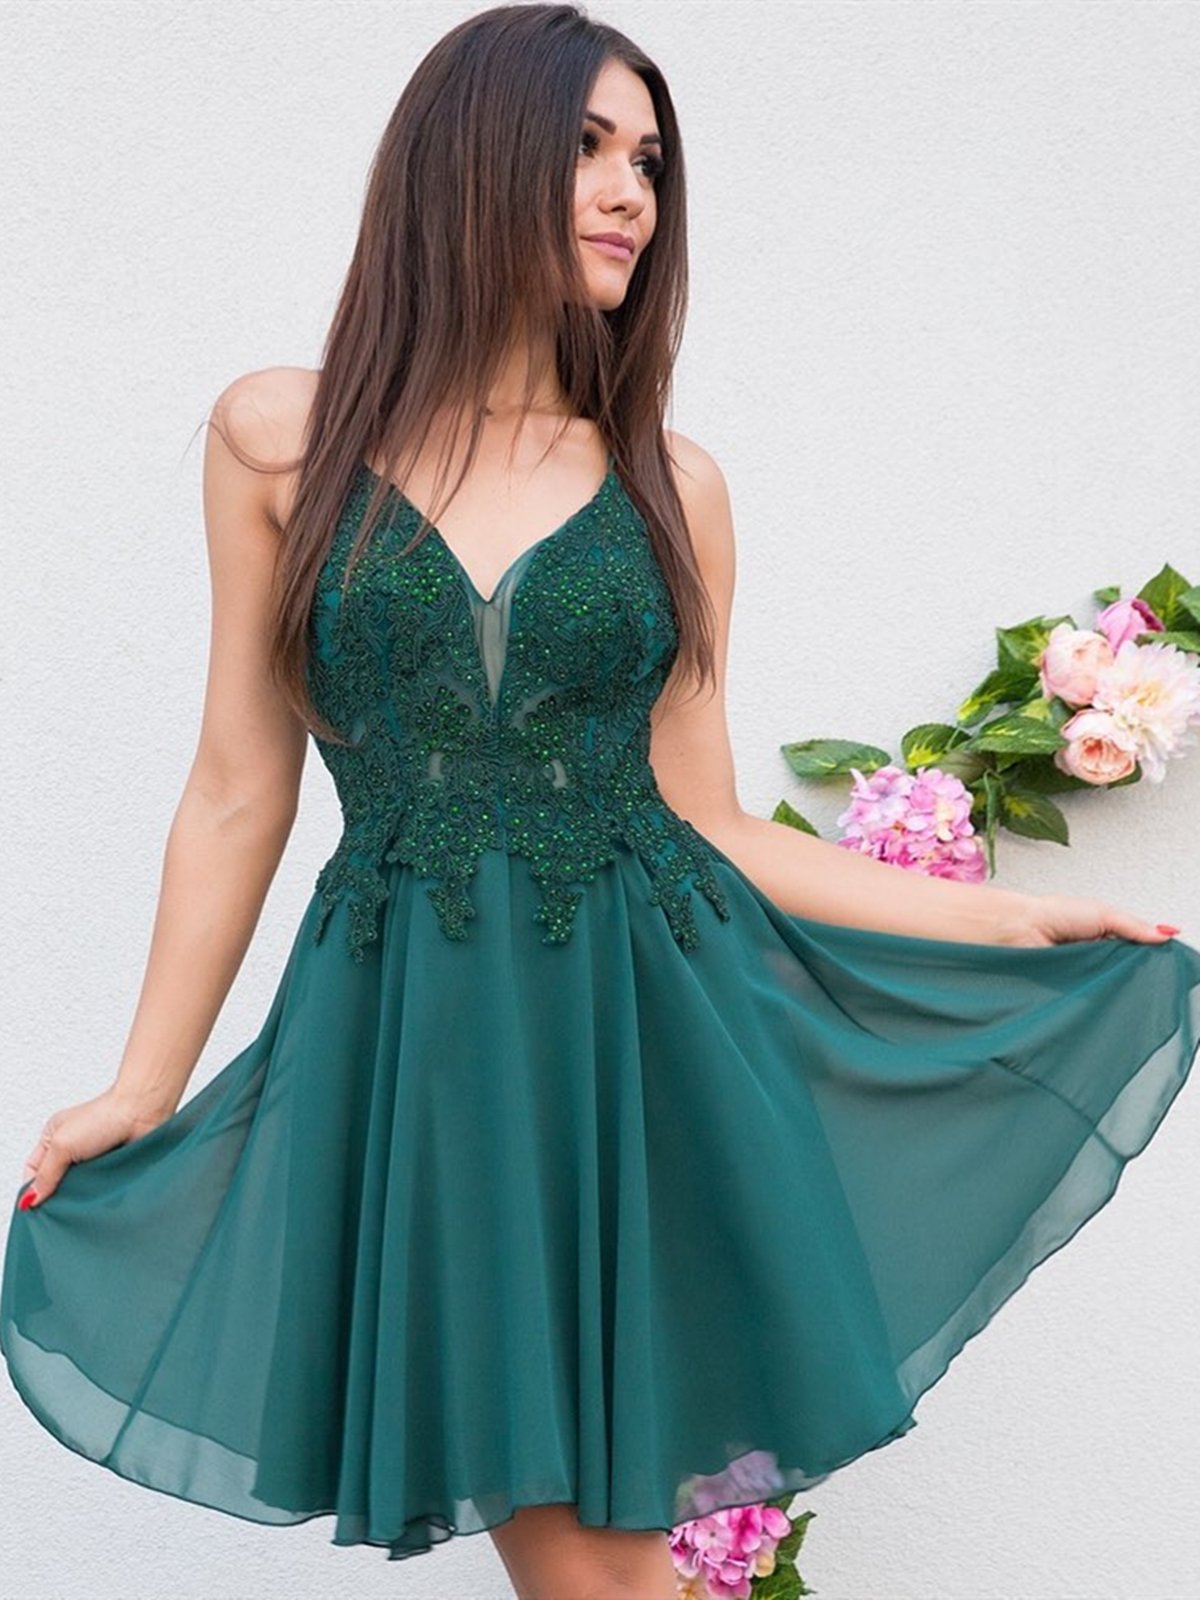 V Neck Short Green Lace Prom Dresses, Short Green Lace Formal Homecoming Graduation Dresses